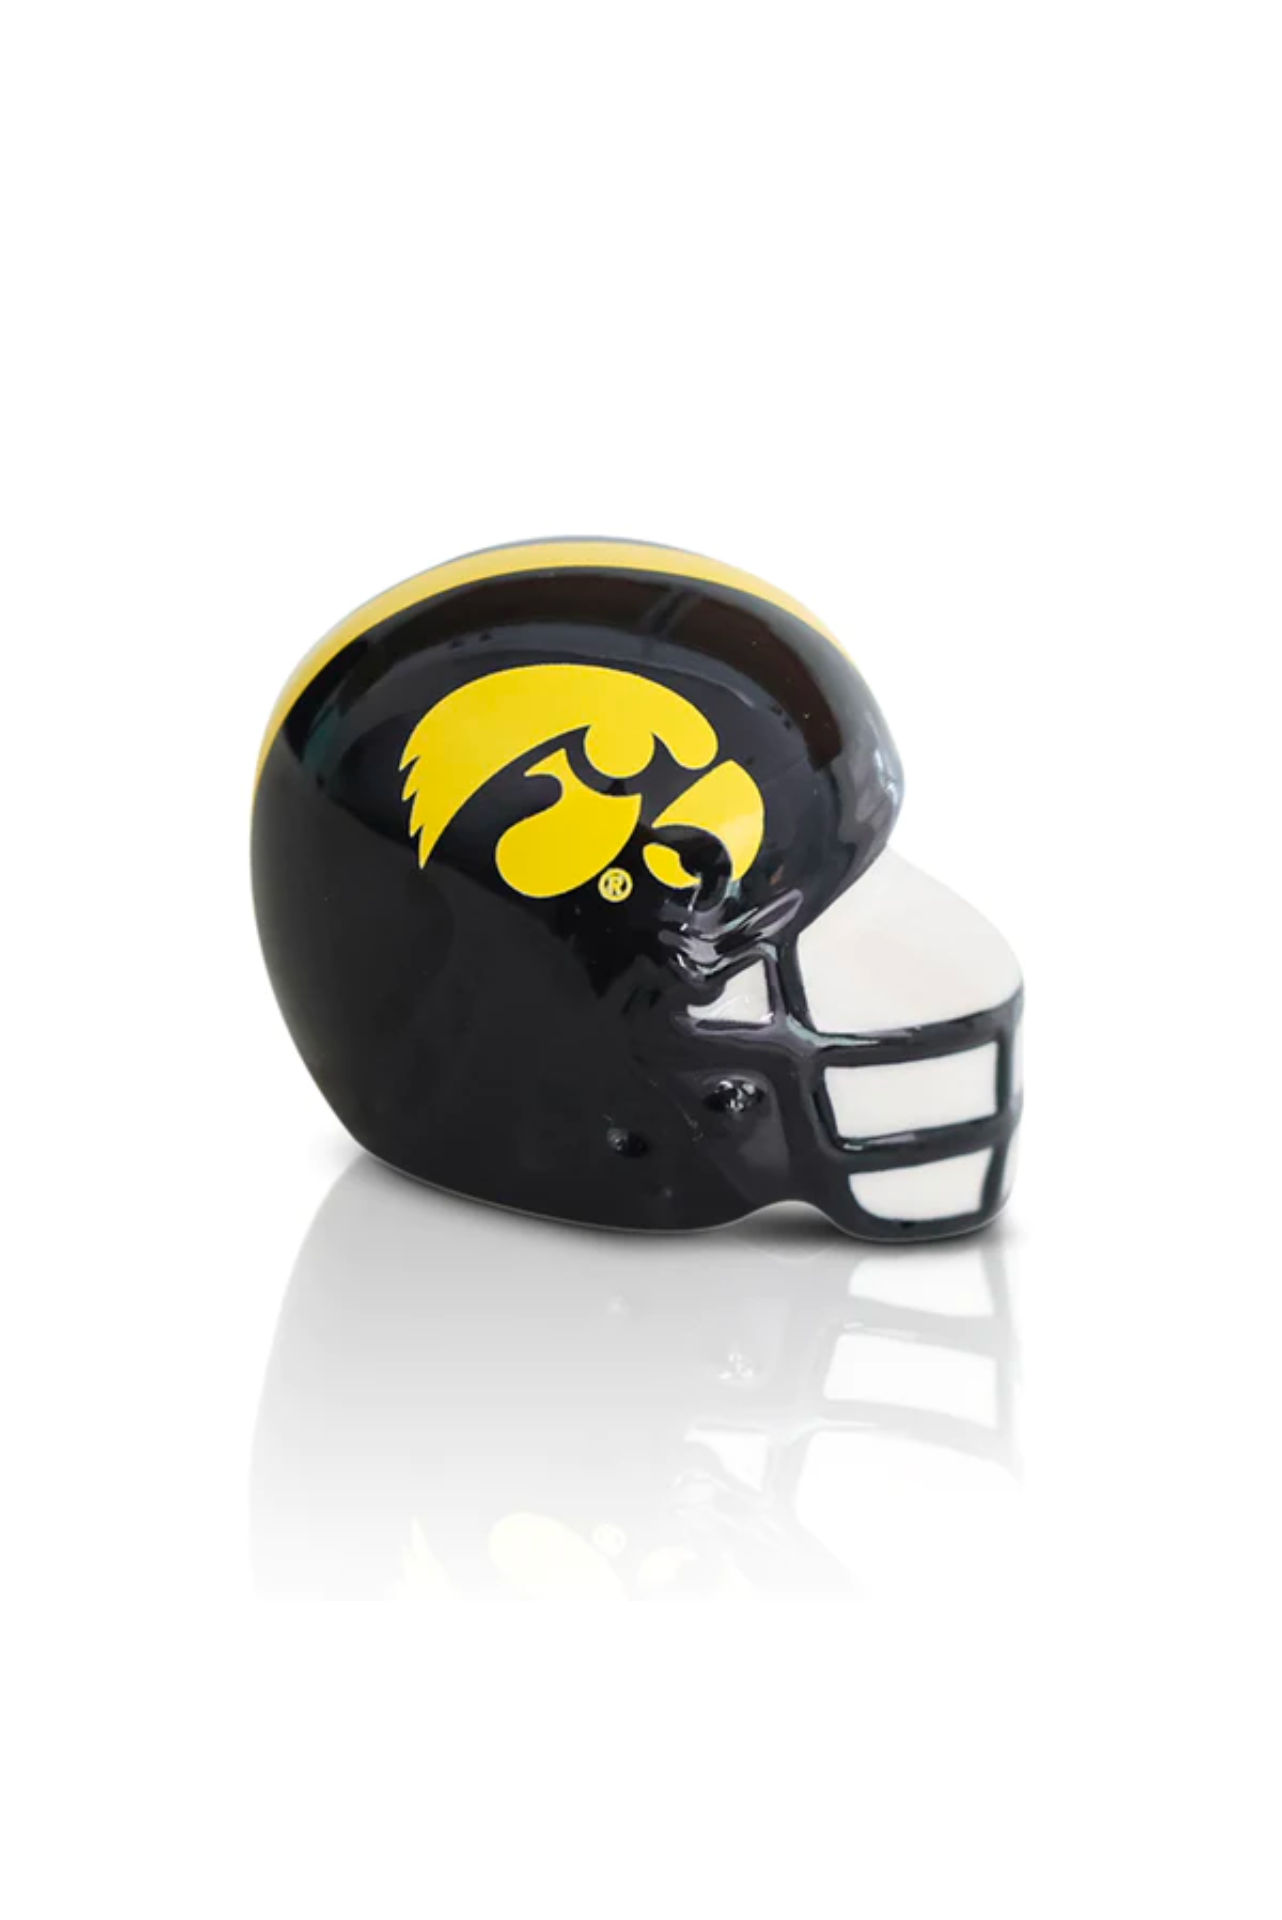 University of Iowa Helmet (A320)